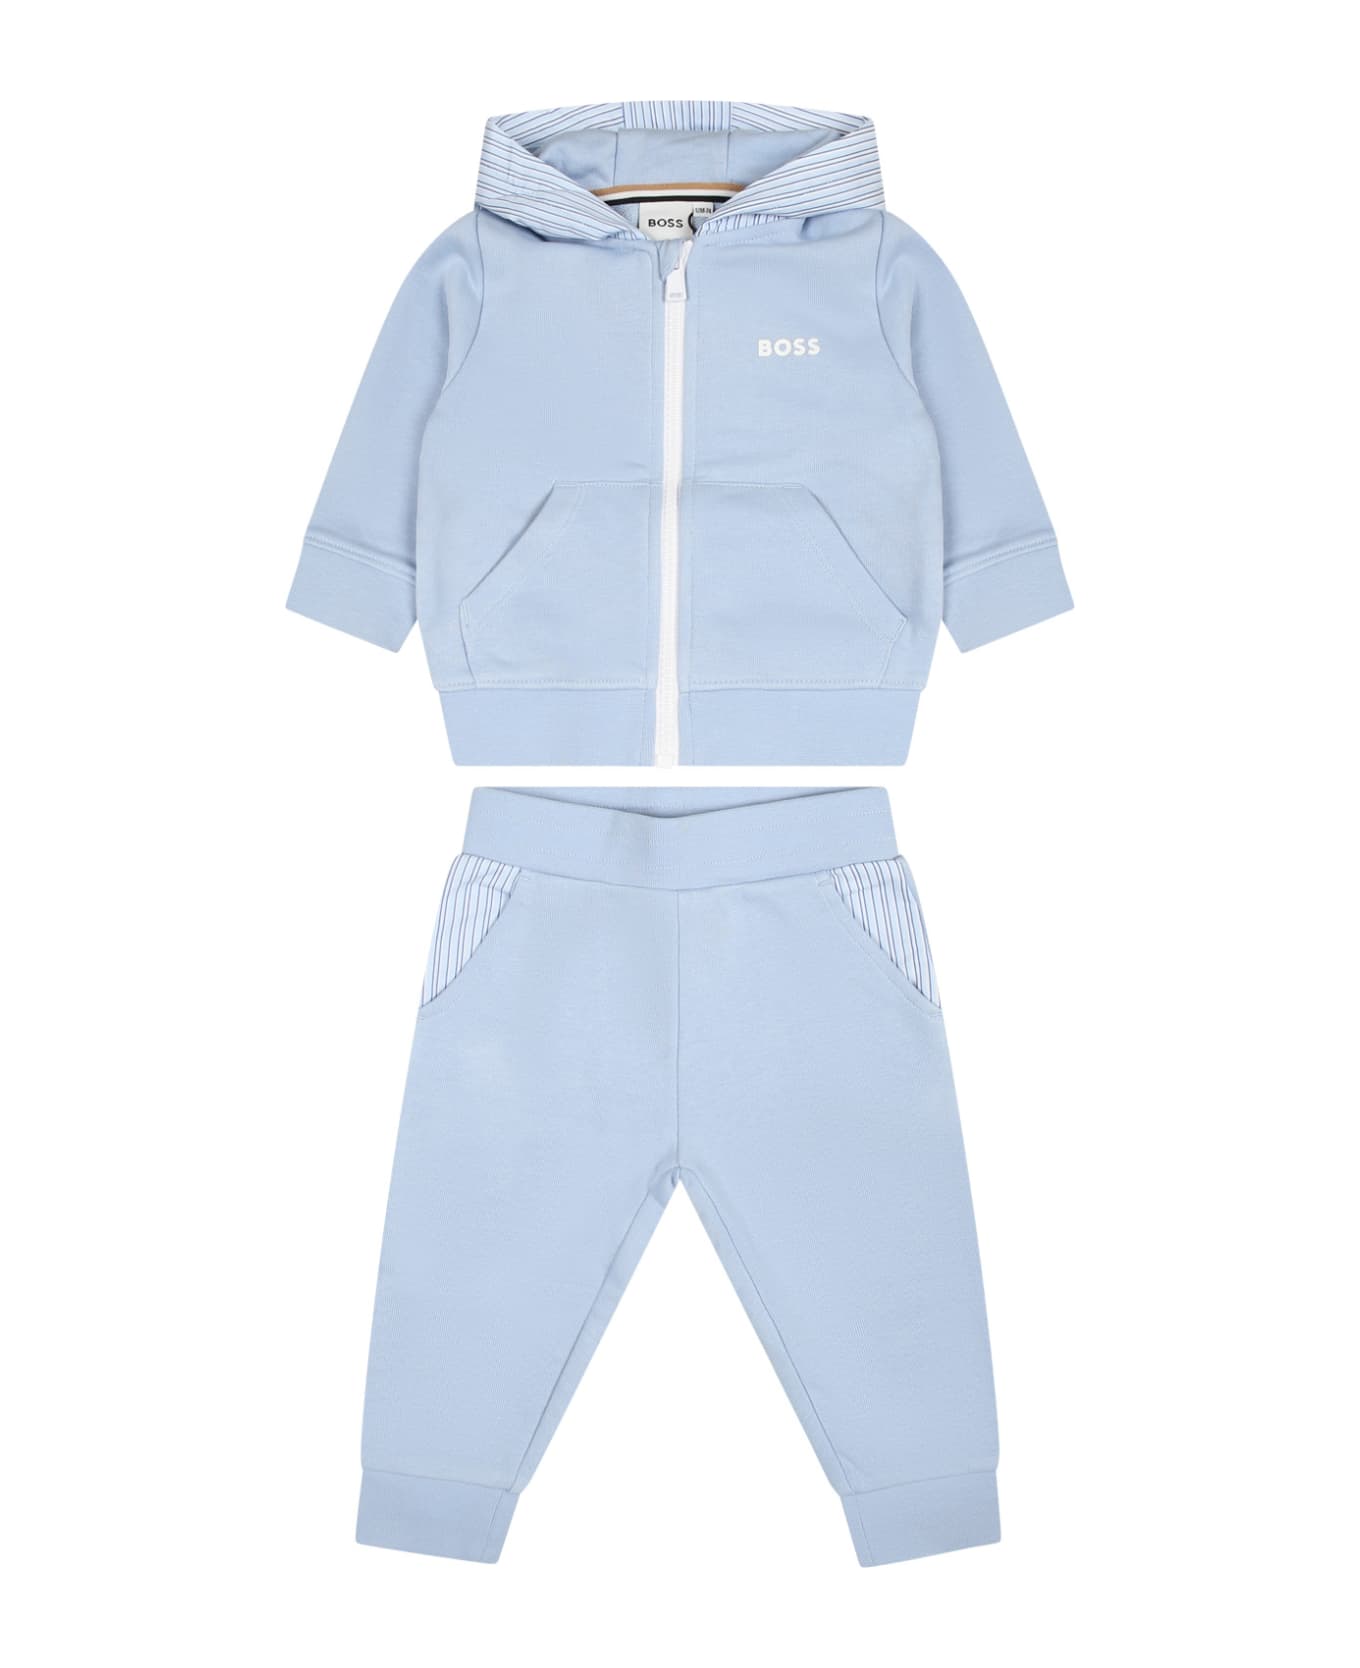 Hugo Boss Light Blue Suit For Baby Boy With Logo - Light Blue ボトムス